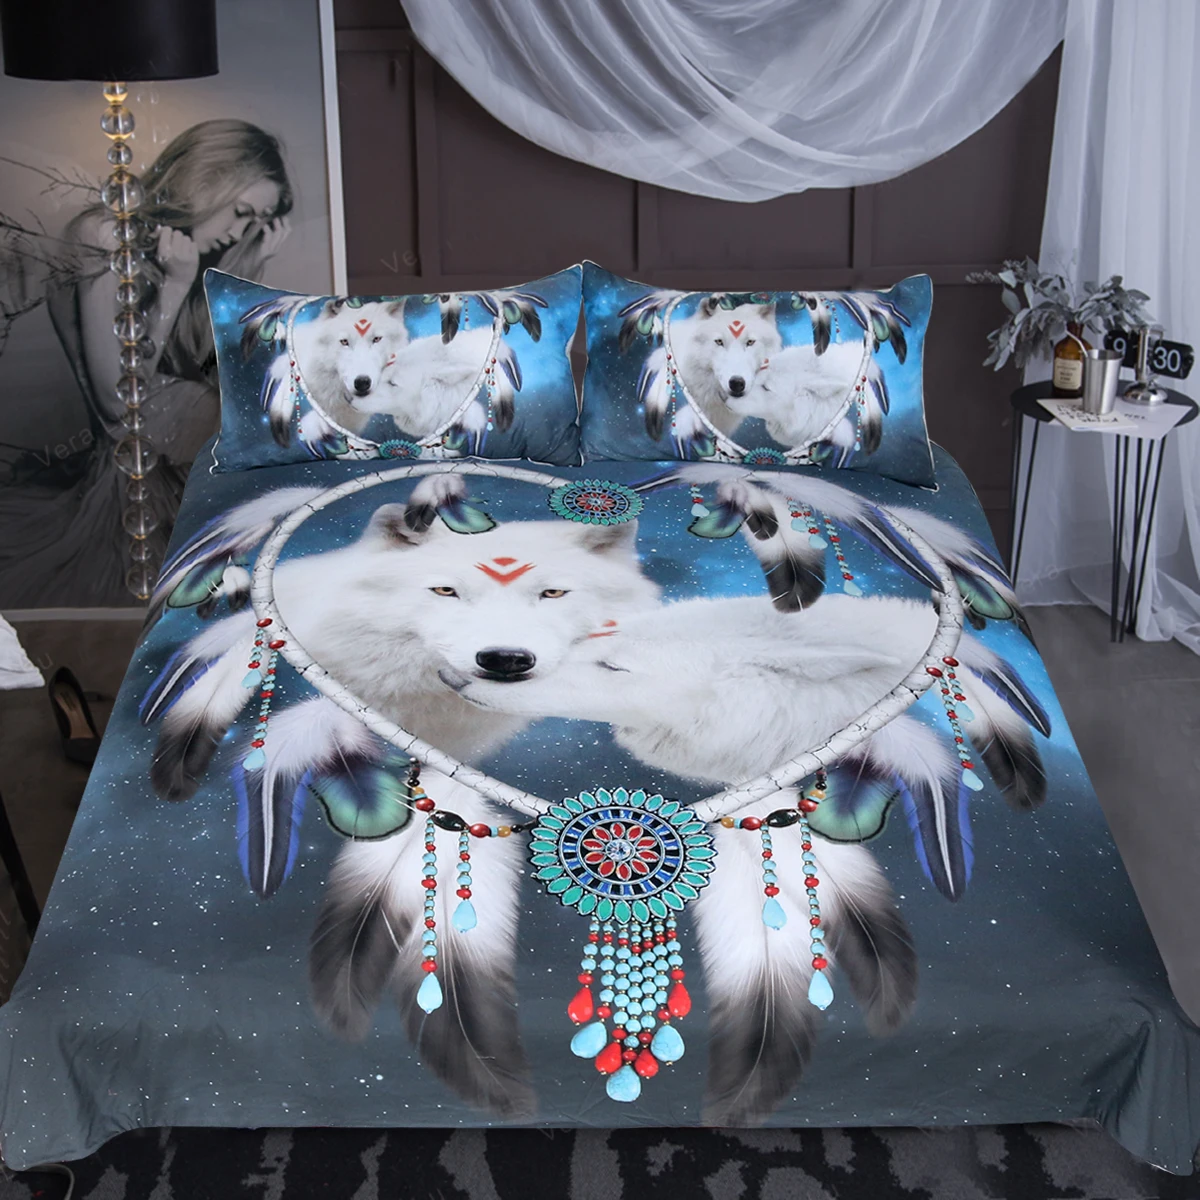 Sleepwish Owl Dreamcatcher Bedding Tribal Dream Catcher Duvet Cover 3 Piece Faux Gold Glitter Black Bedding Set Twin 